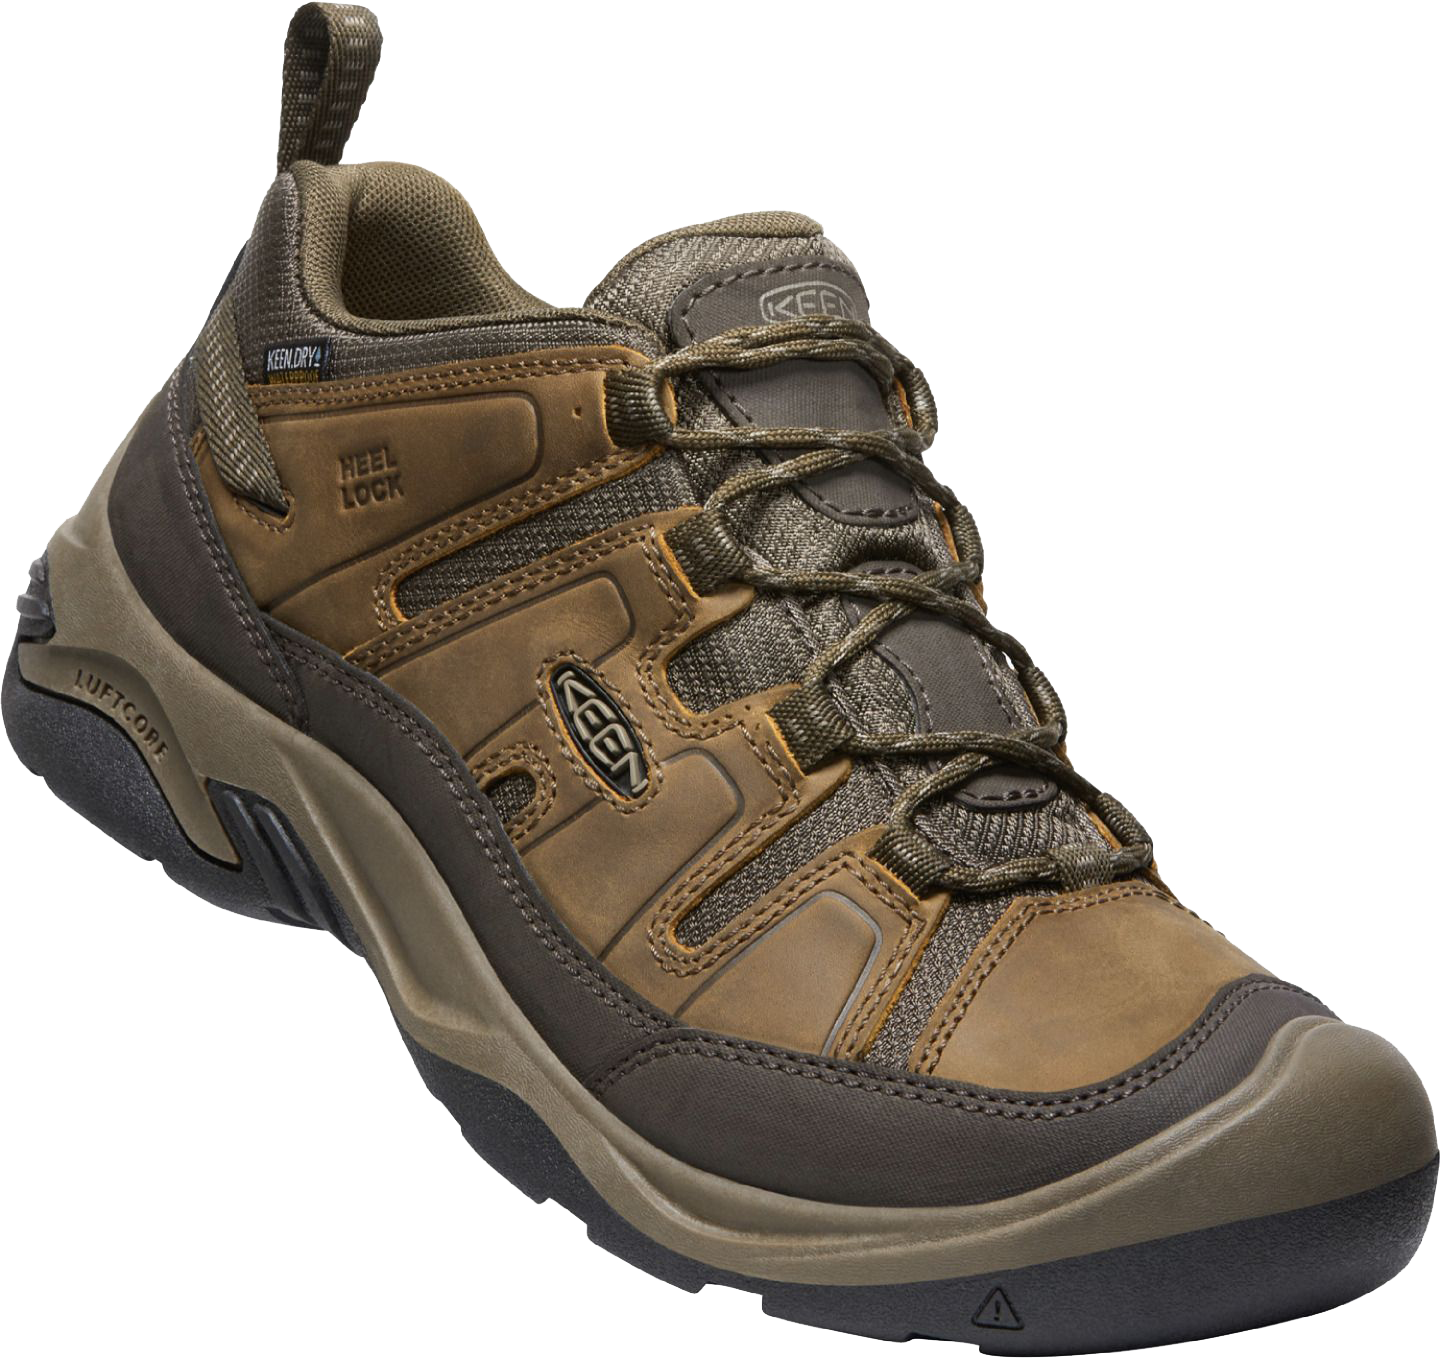 KEEN Circadia Low WP Waterproof Hiking Shoes for Men - Shitake/Brindle - 13W